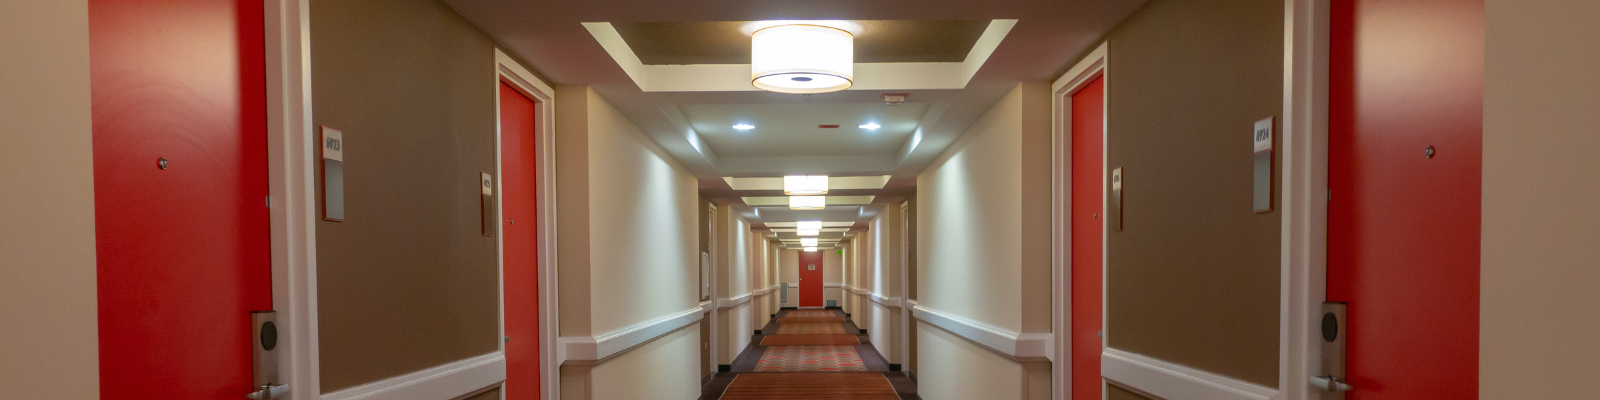 LED Savings Hotel Lighting